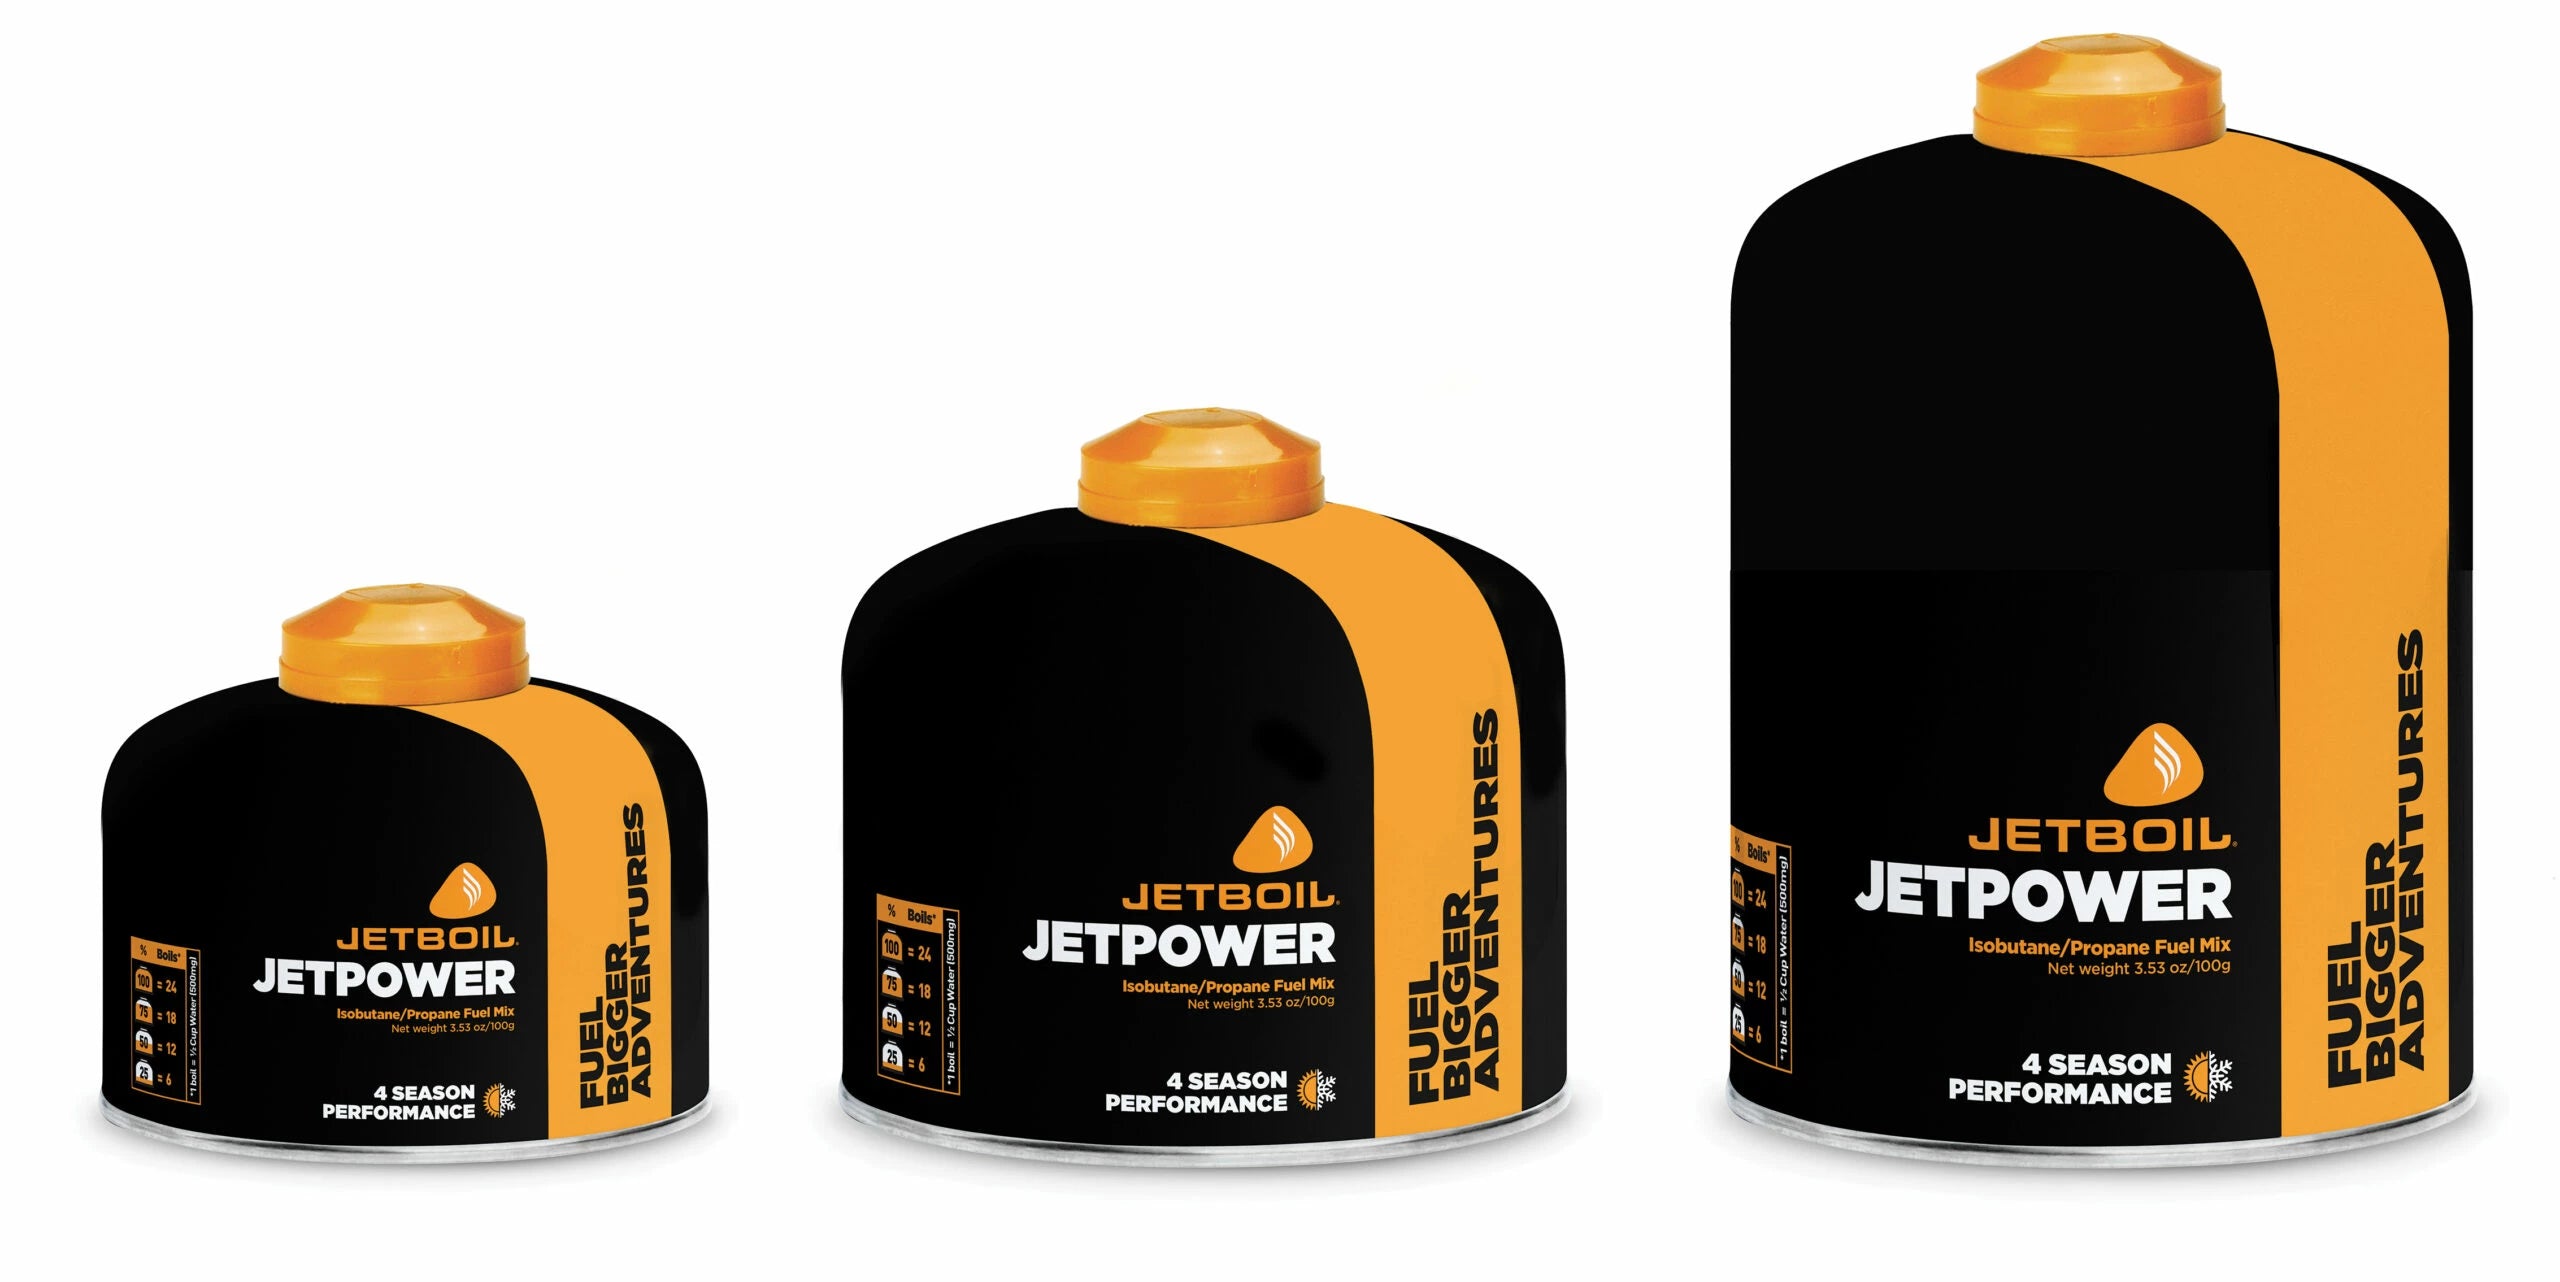 Jetboil JetPower Gas 230g